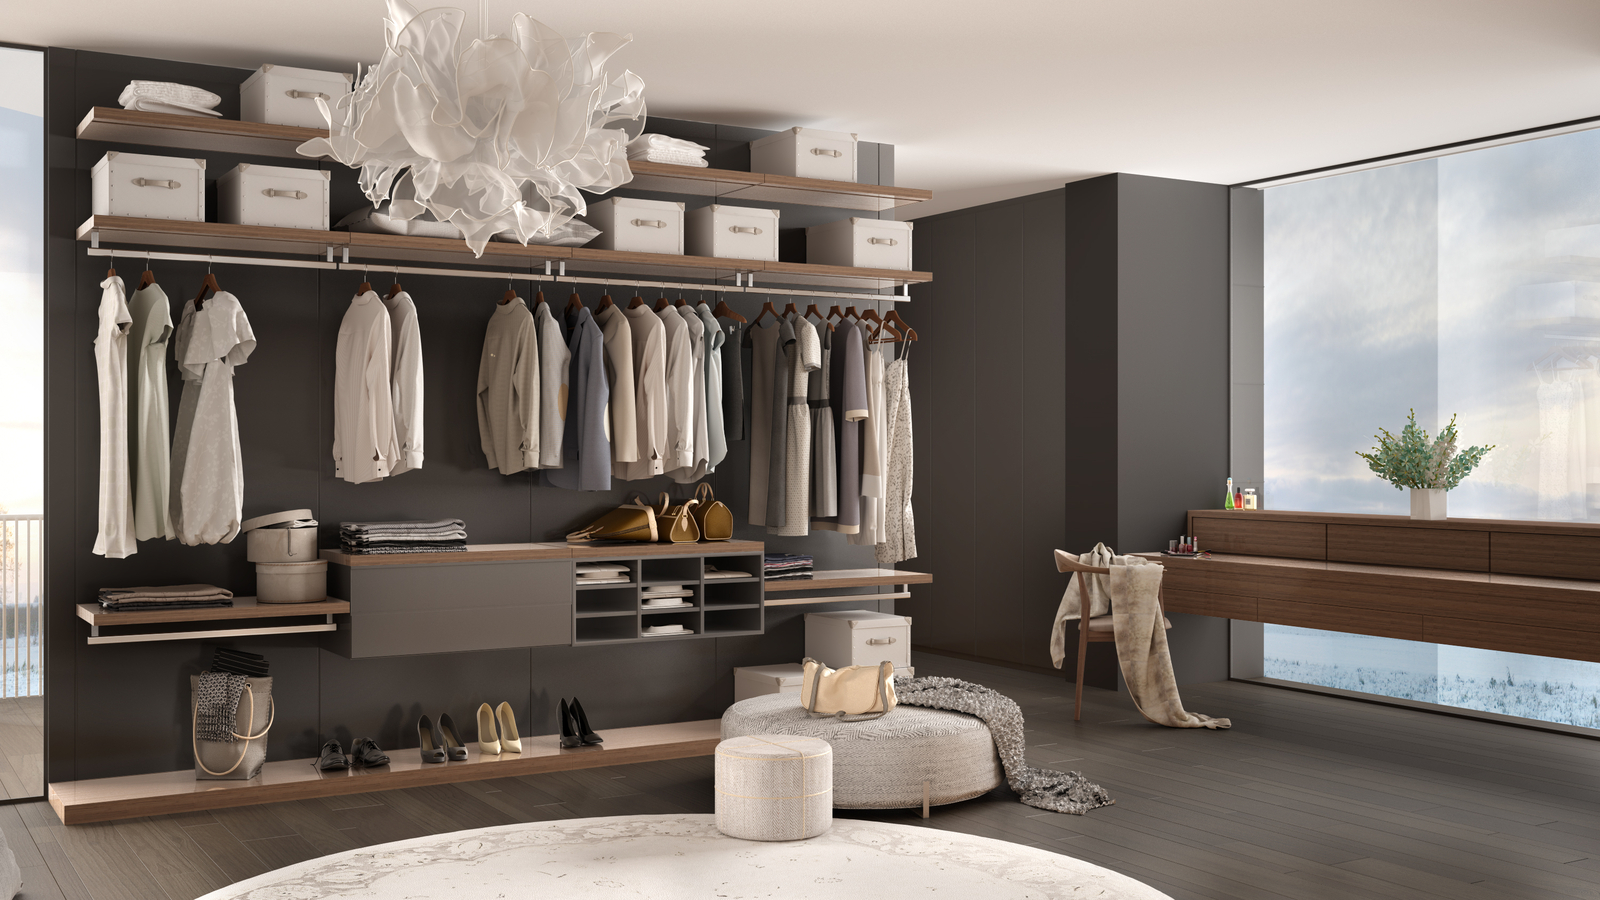 20 essential tips for closet organization | Yardbarker